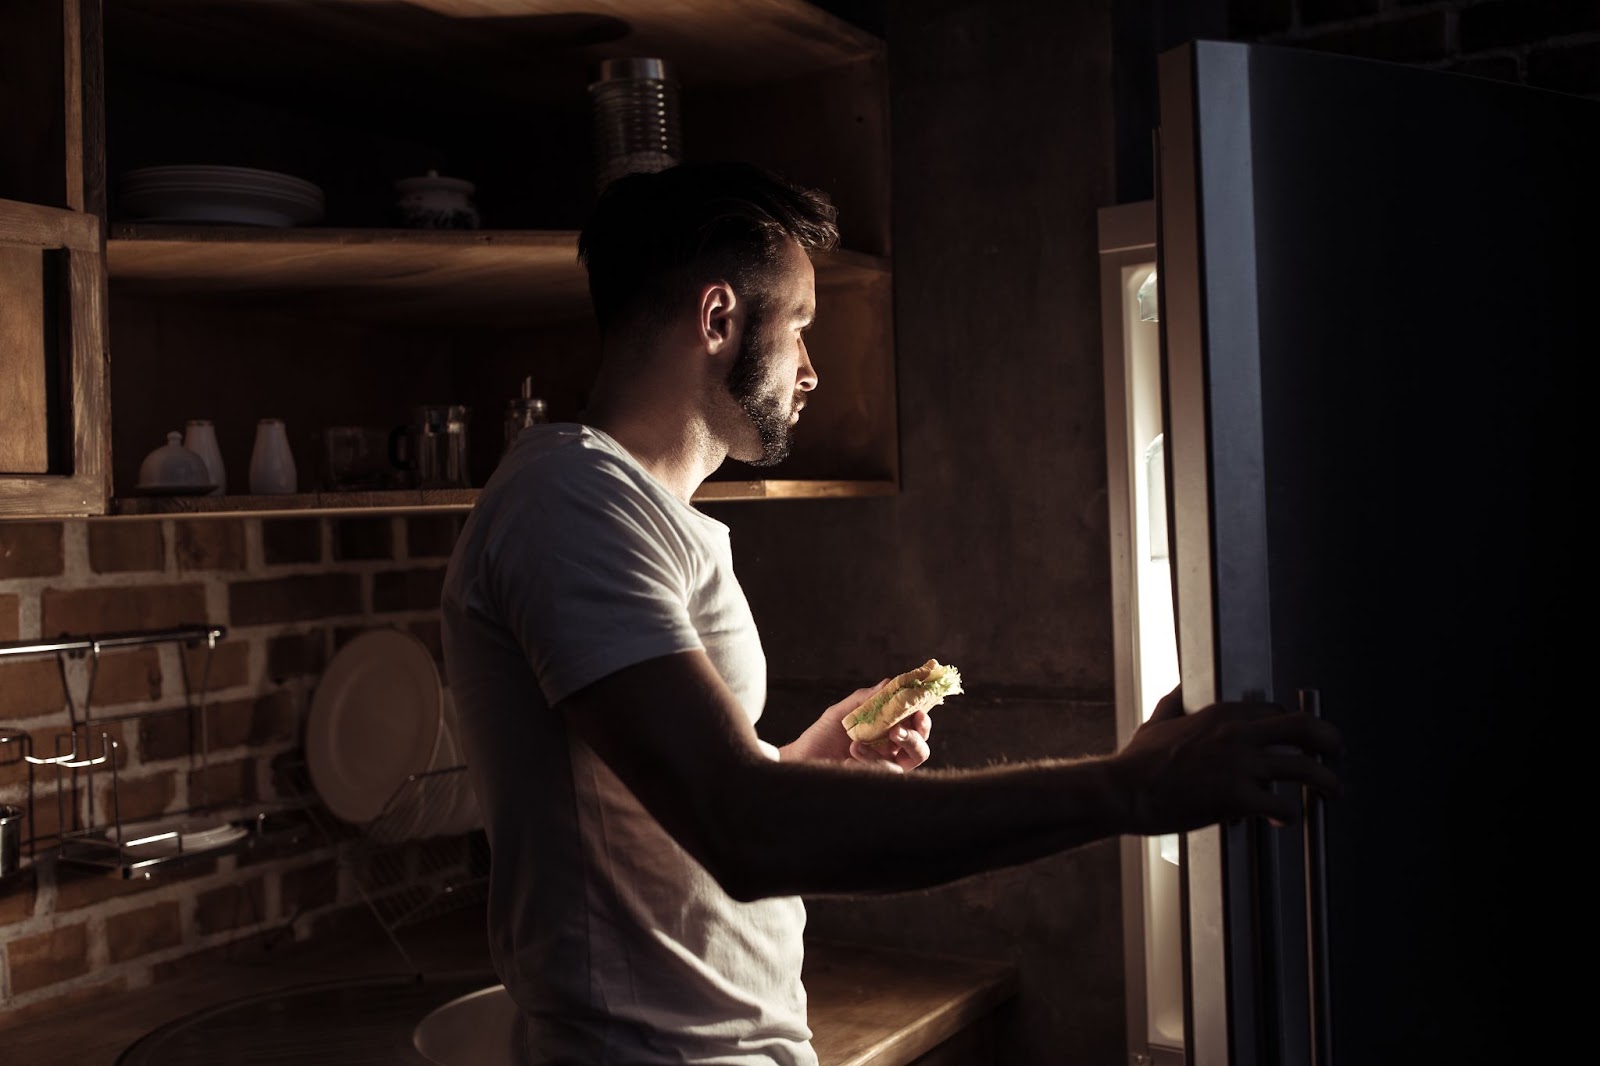 Man opening the refrigerator at home at night